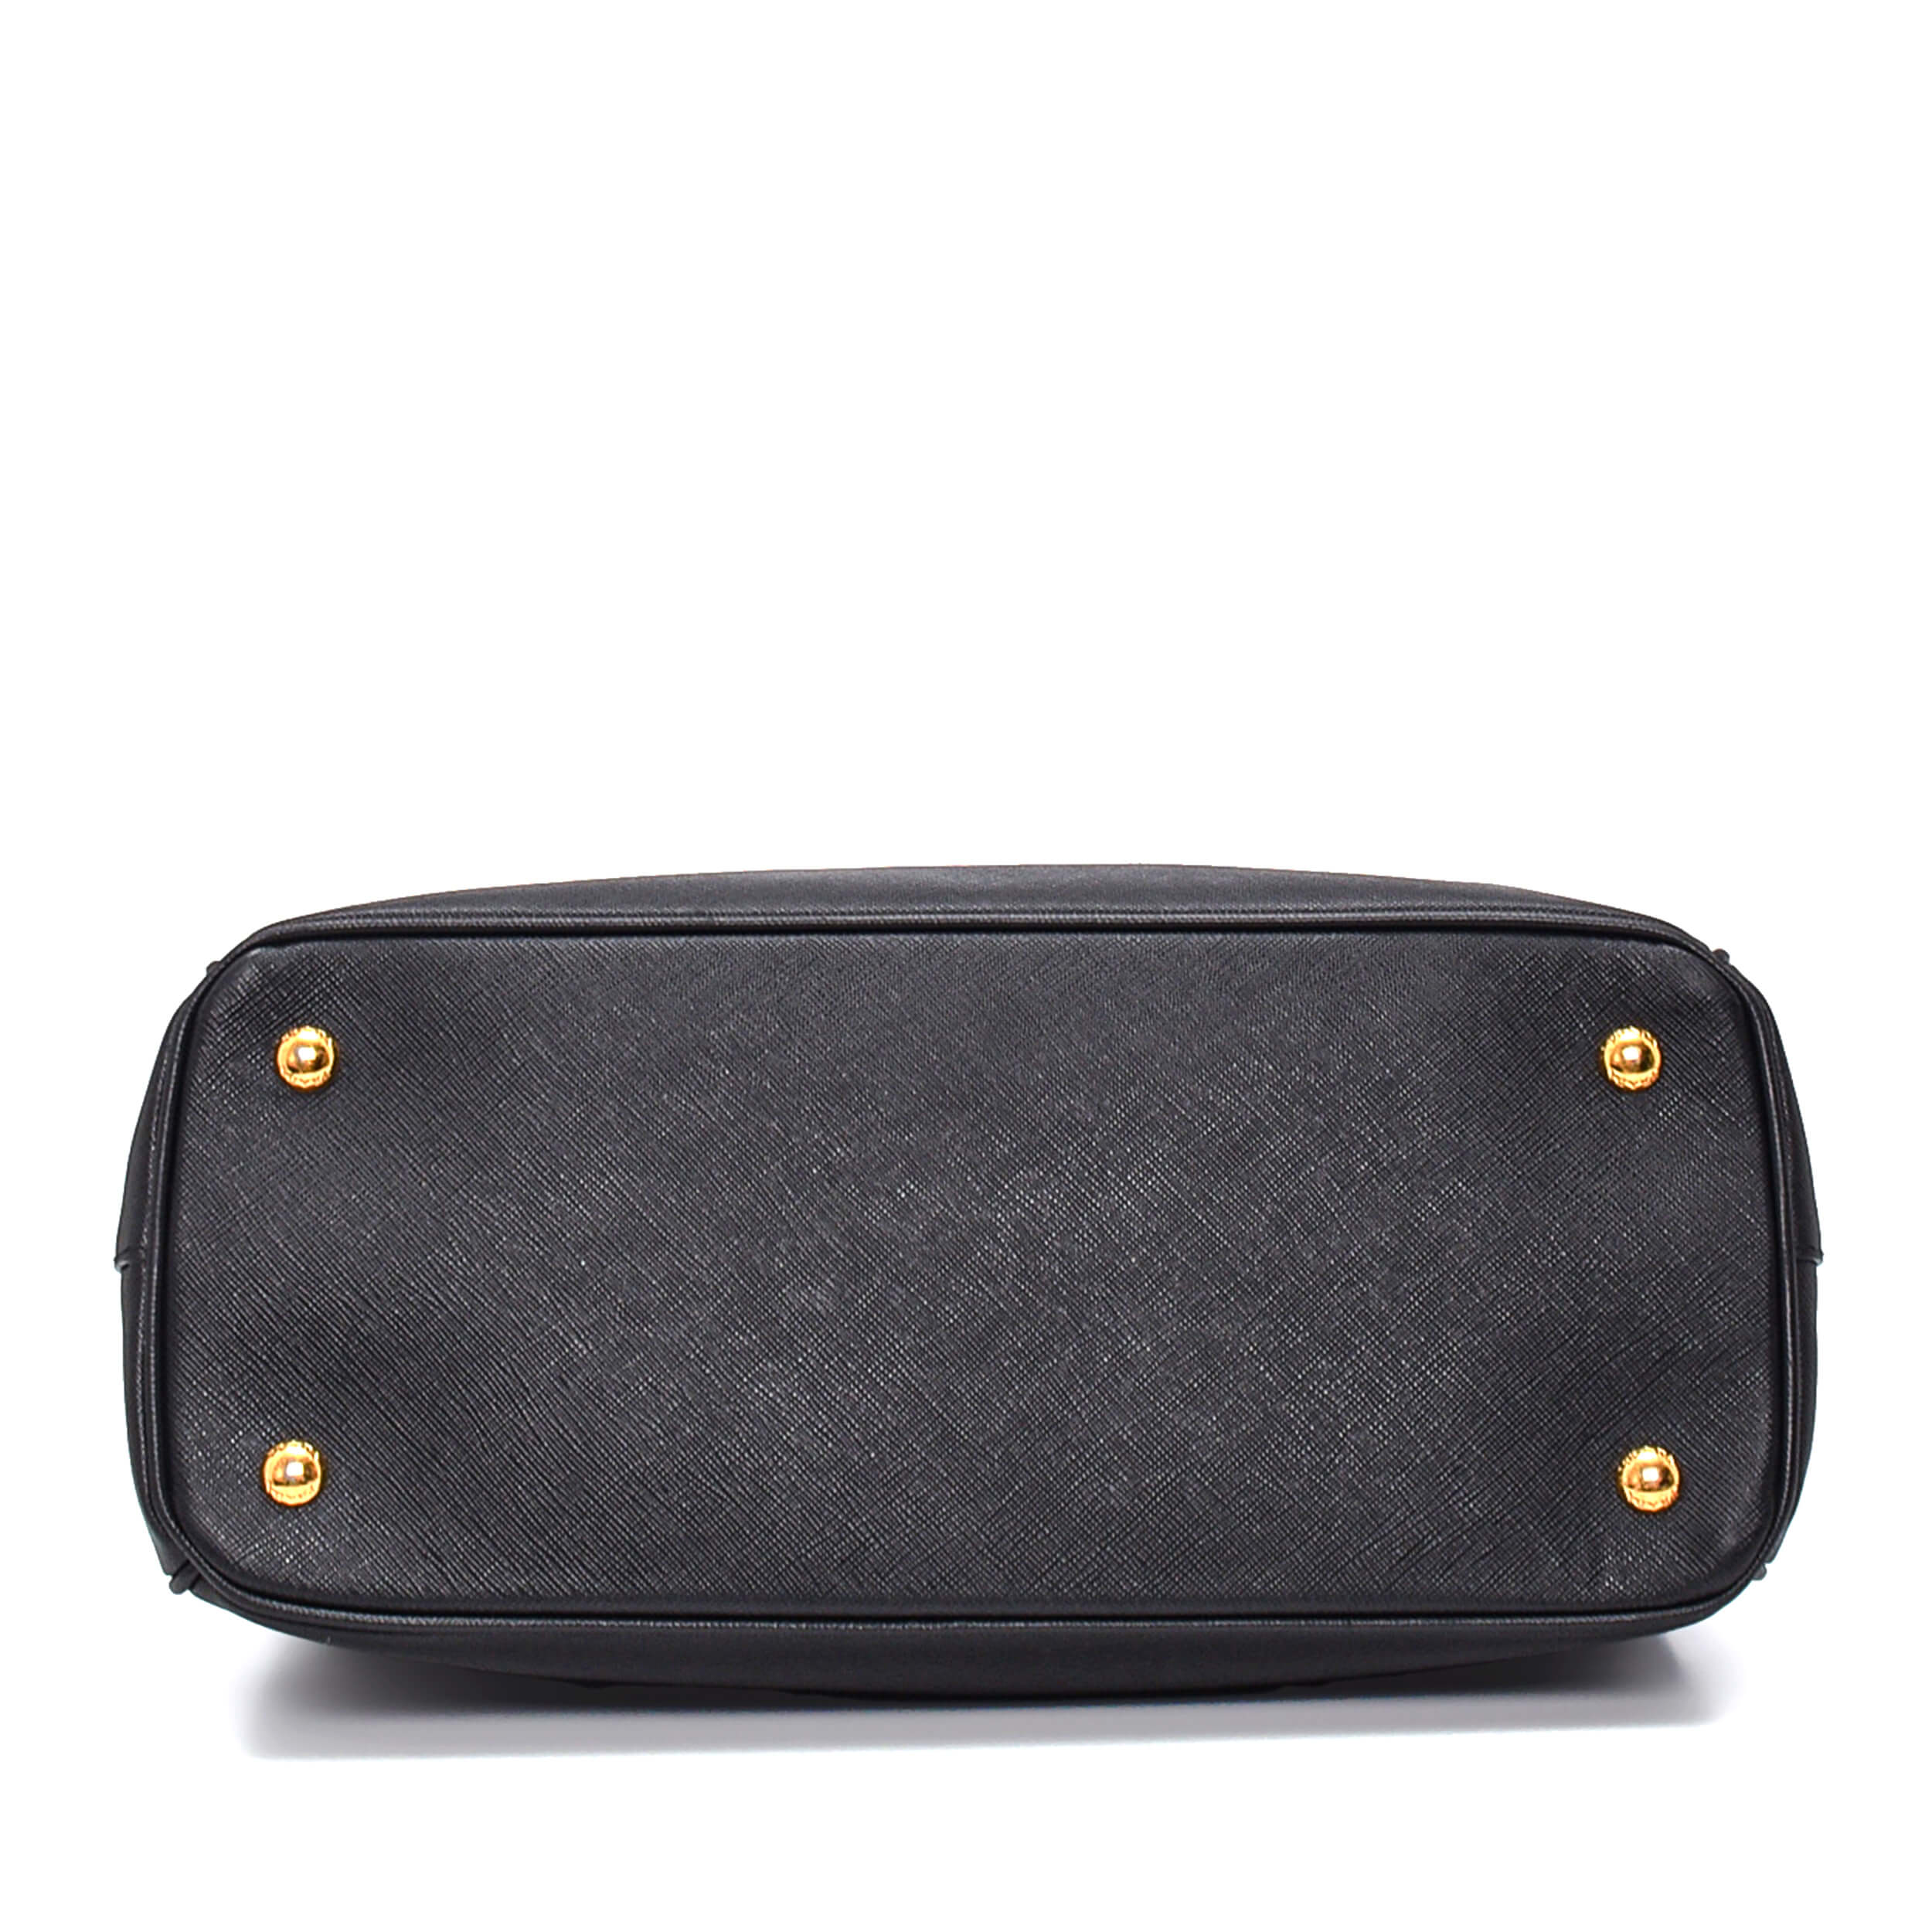 Prada - Black Saffiano Leather Small Galleria Bag